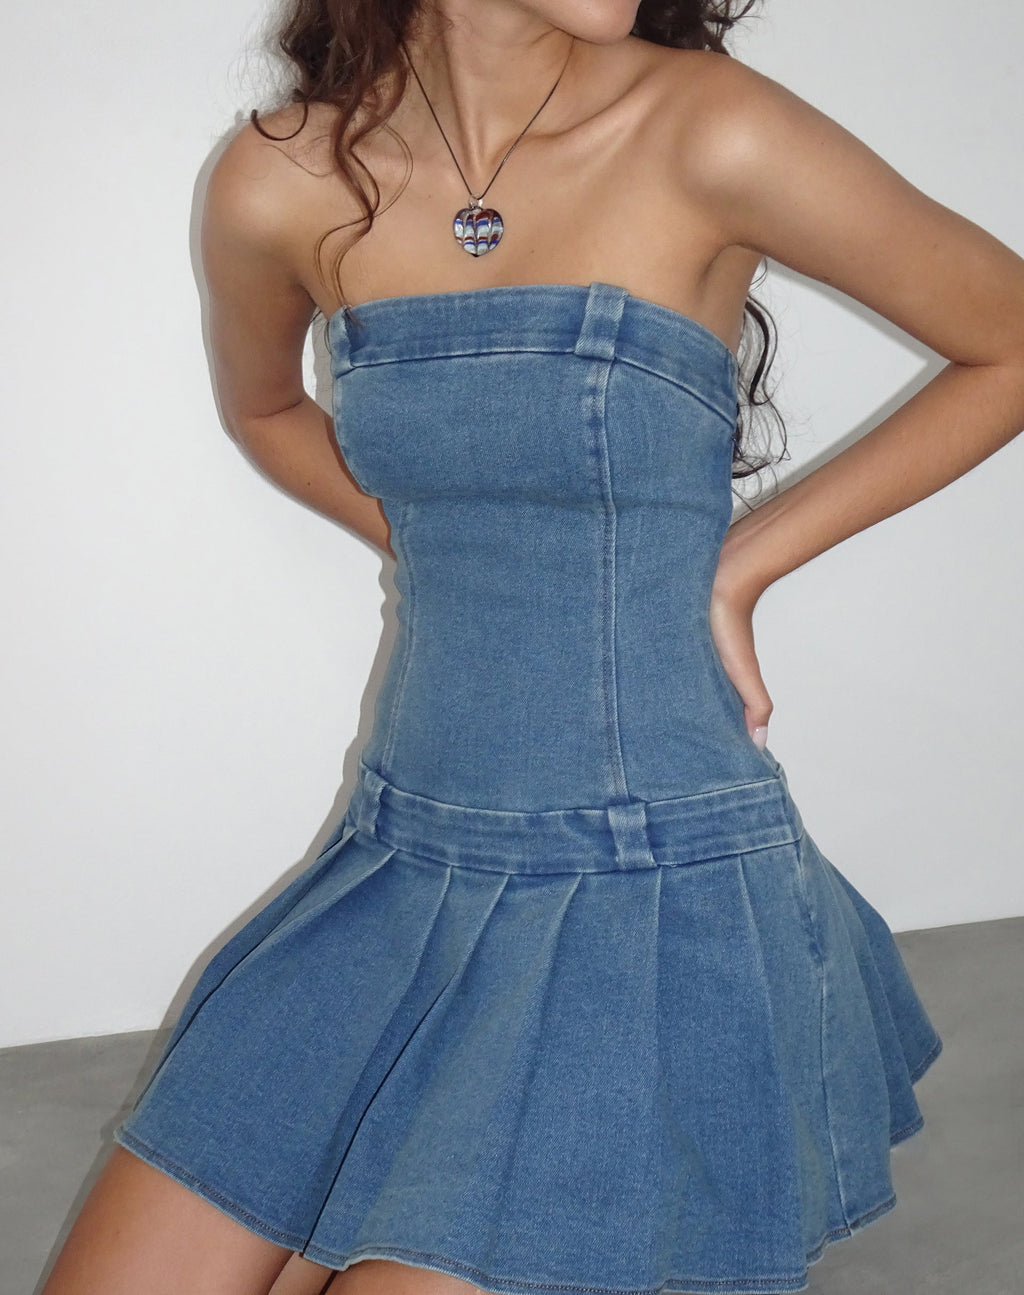 Pajaya Denim Bandeau Mini Dress in Blue Wash